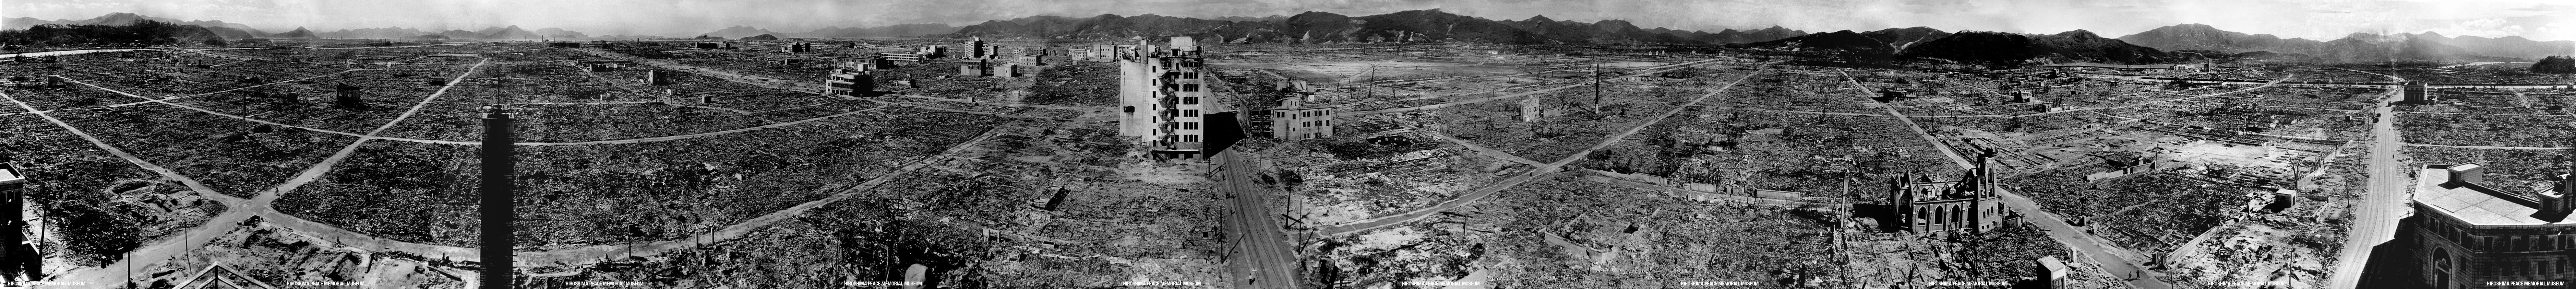 Hiroshima Panorama Image No.4